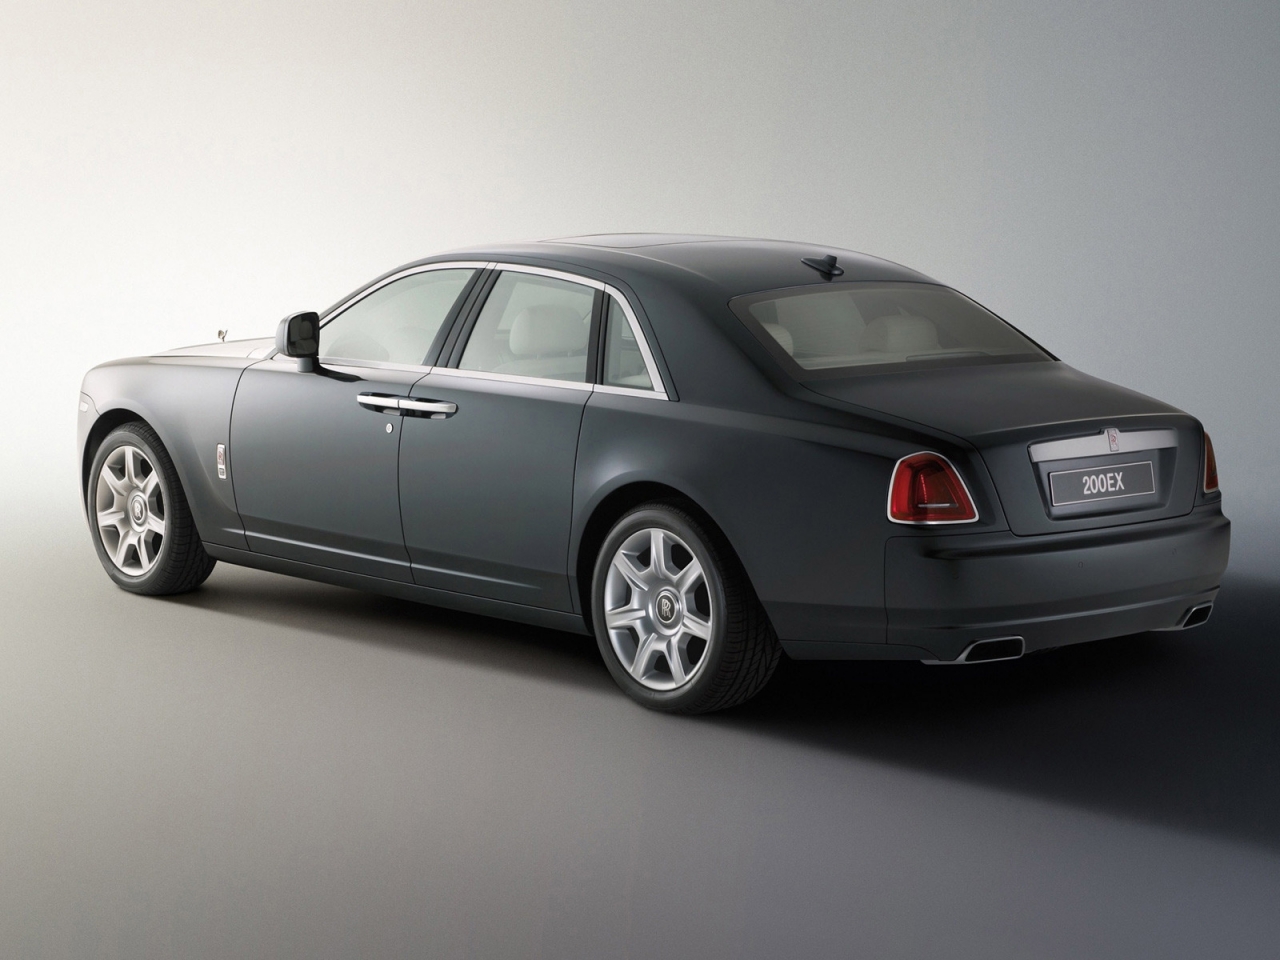 Rolls Royce 200EX for 1280 x 960 resolution